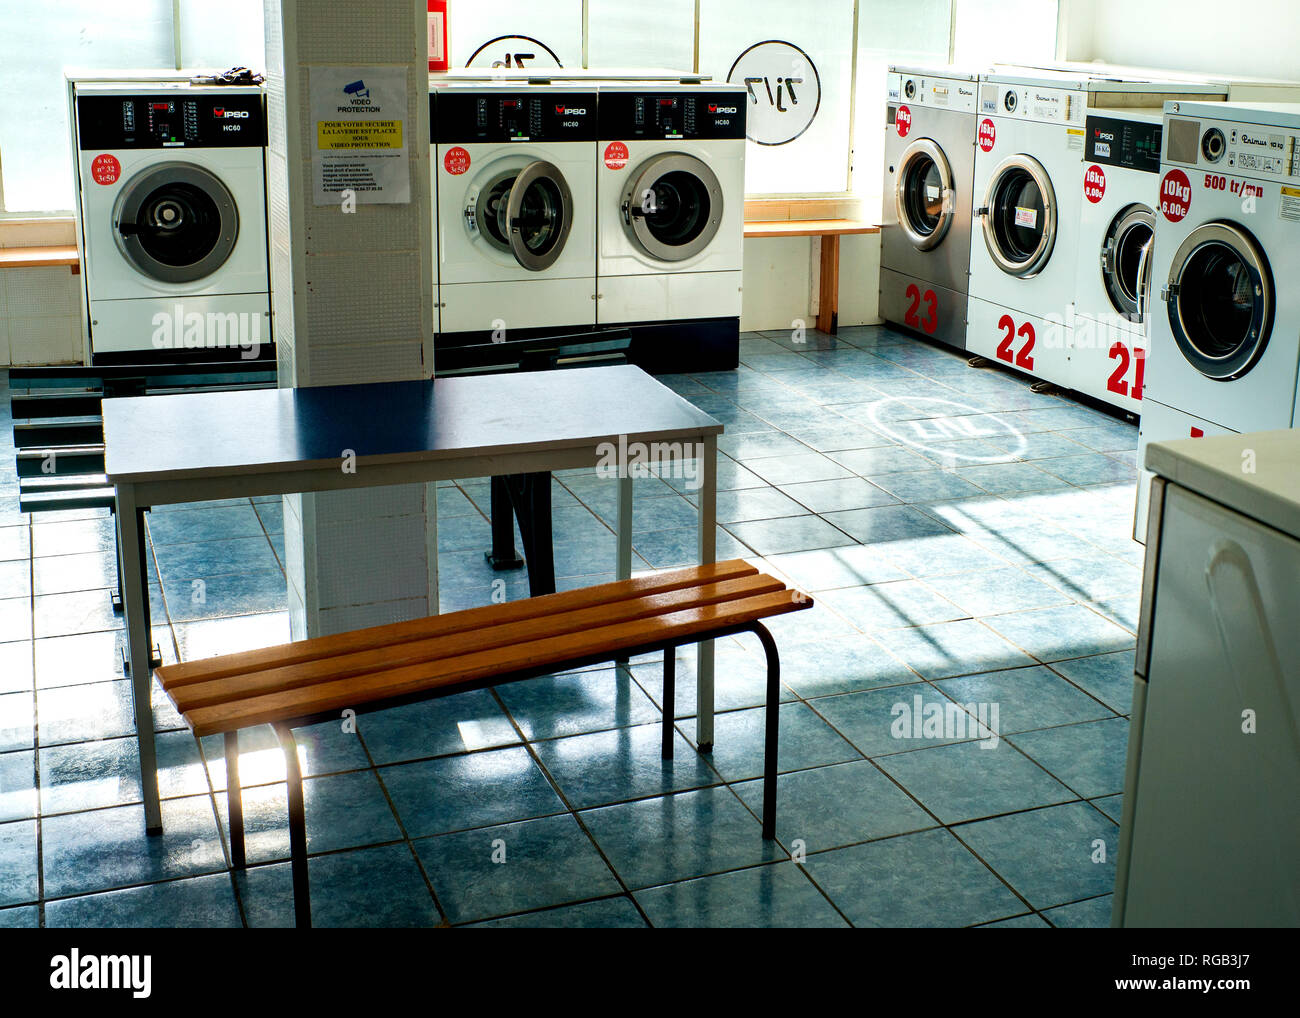 public laundromat empty interior Stock Photo